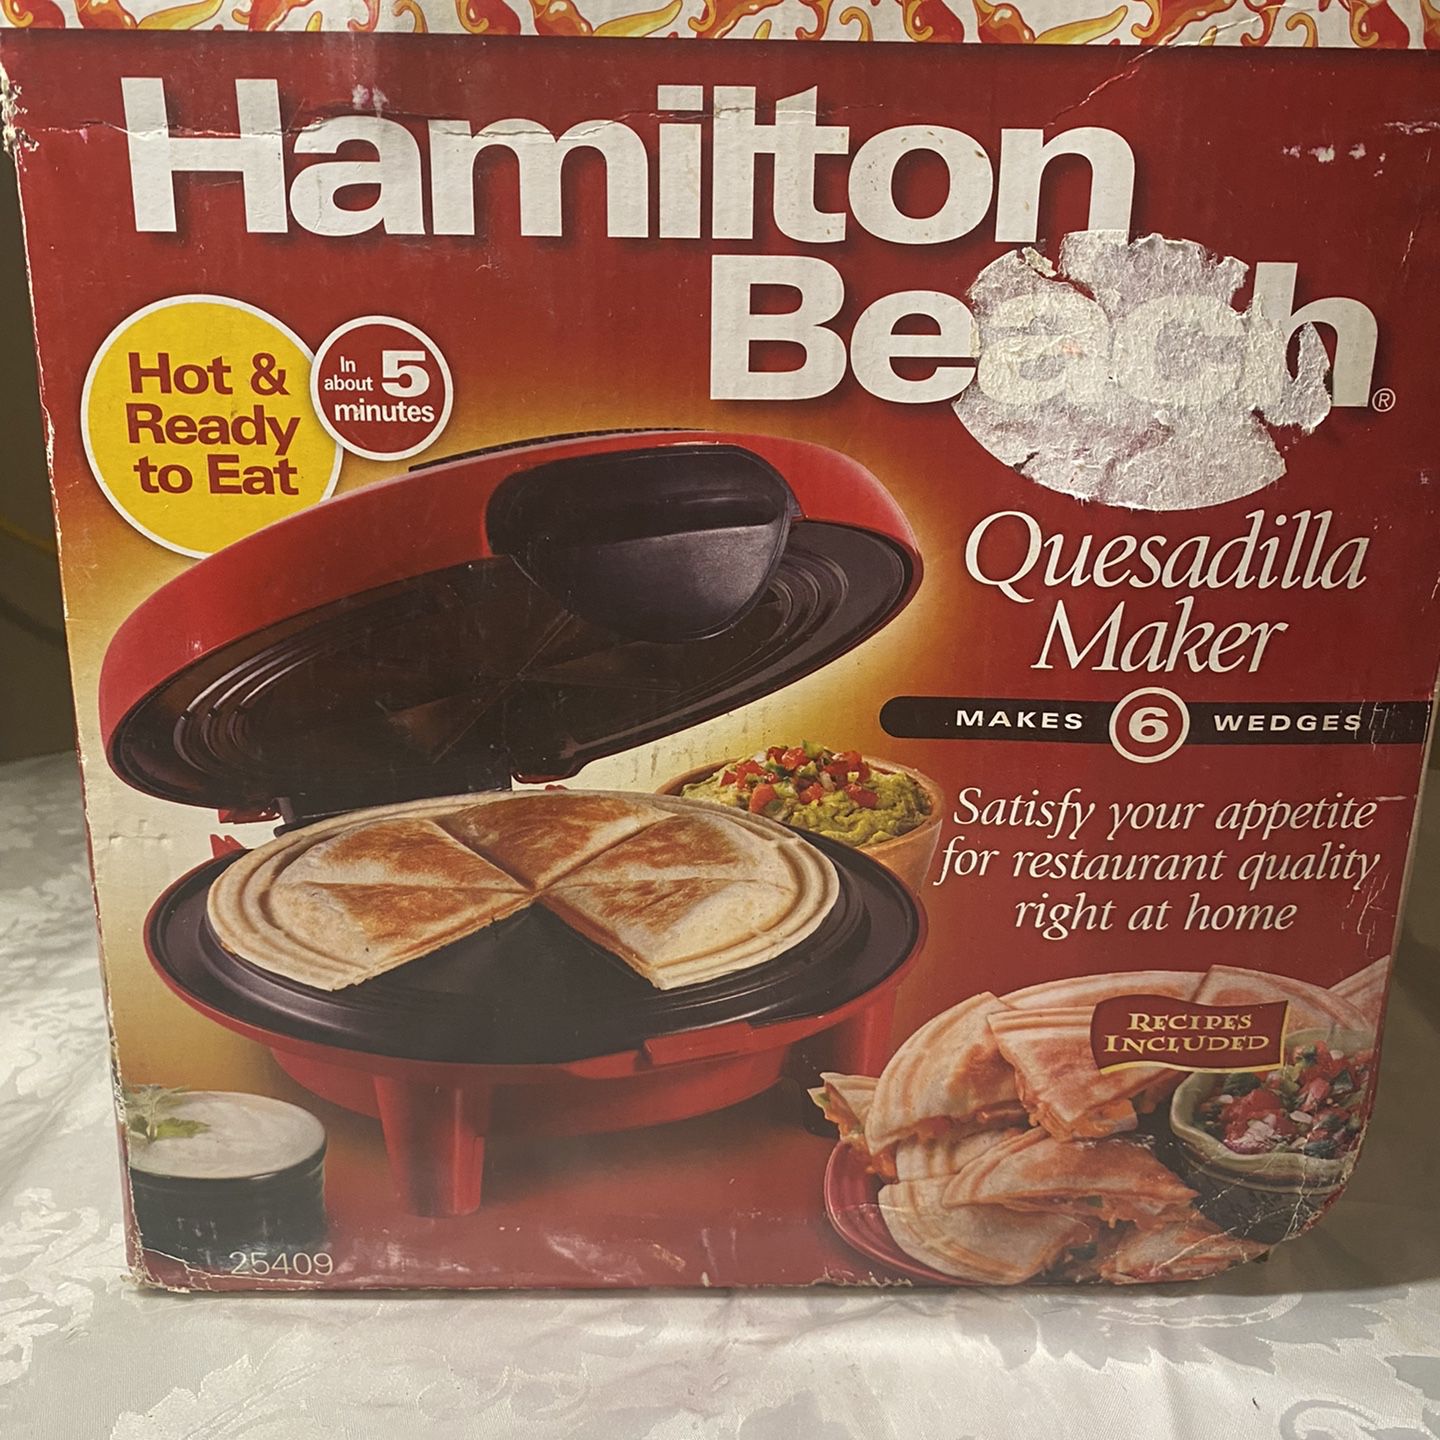 Hamilton Beach 25409 Quesadilla Maker